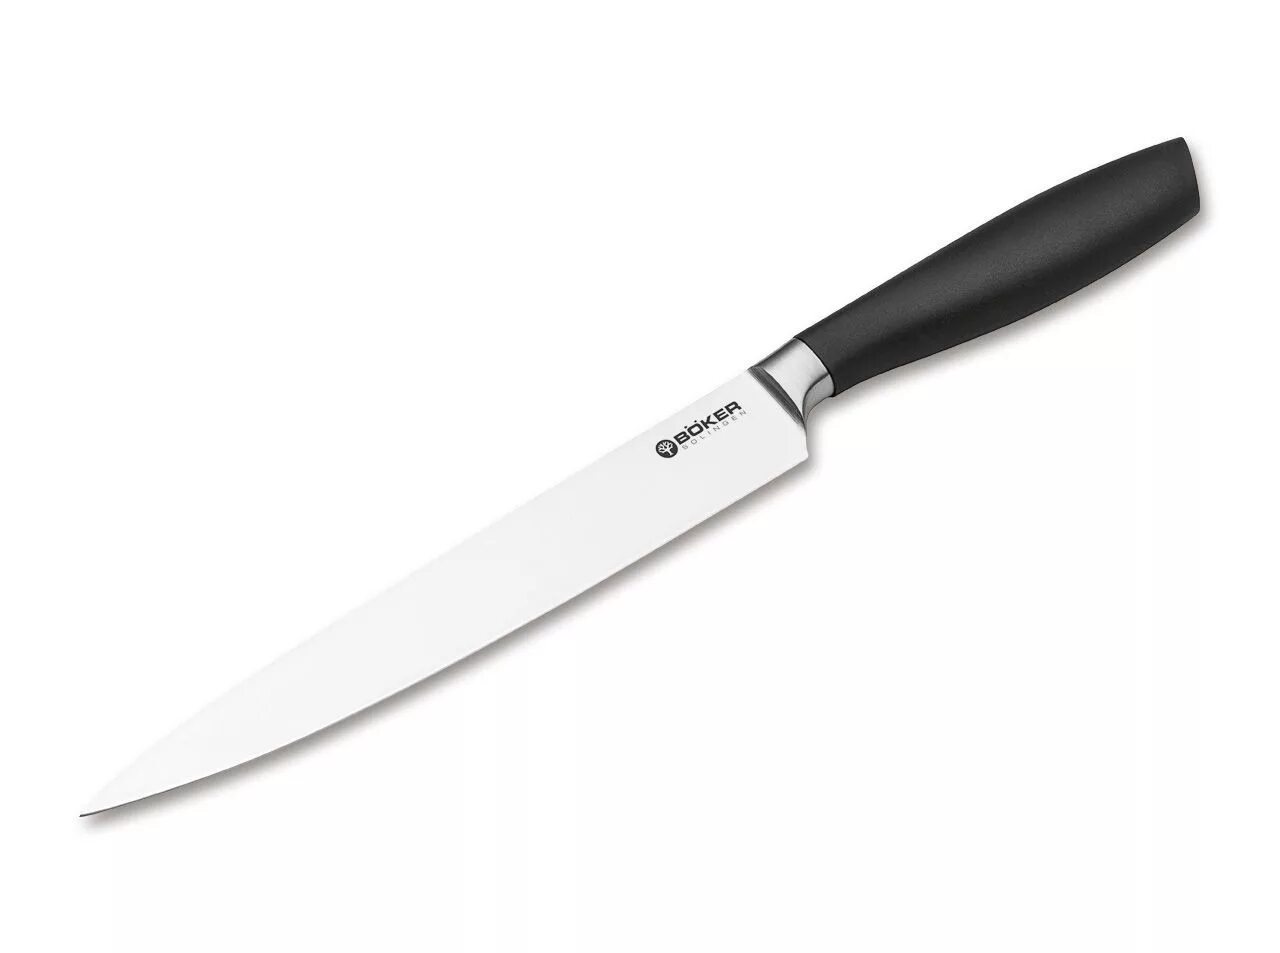 Недорогие кухонные ножи. Нож Boker Manufaktur Solingen. Boker нож поварской Core 16 см. Boker нож для хлеба Core 21,9 см. Нож Sensei x50crmov15.